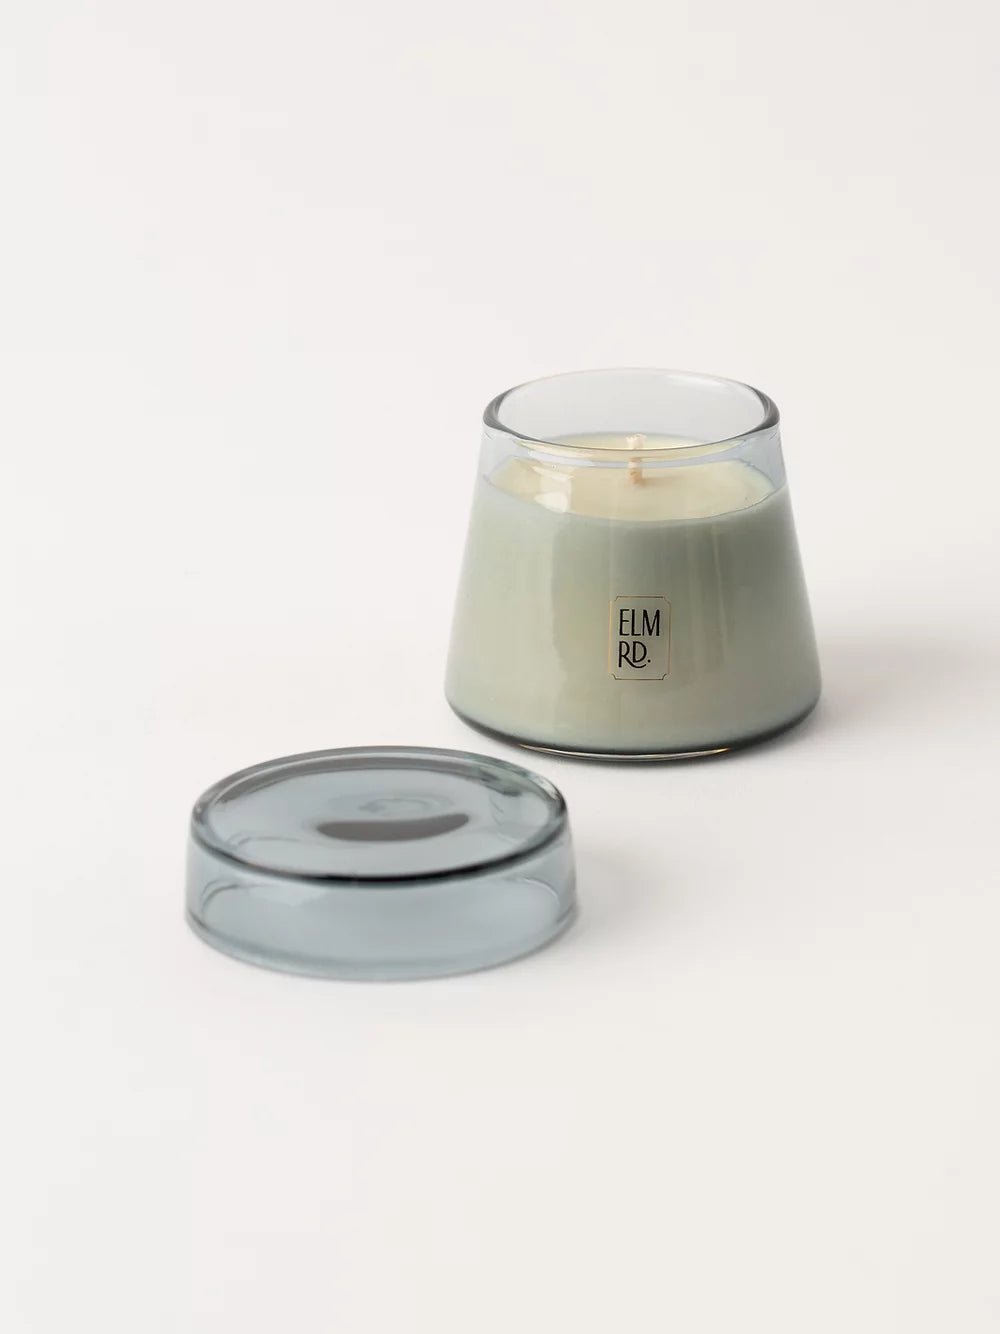 Amira Mini Scented Candle - IOSOI Skin Lab